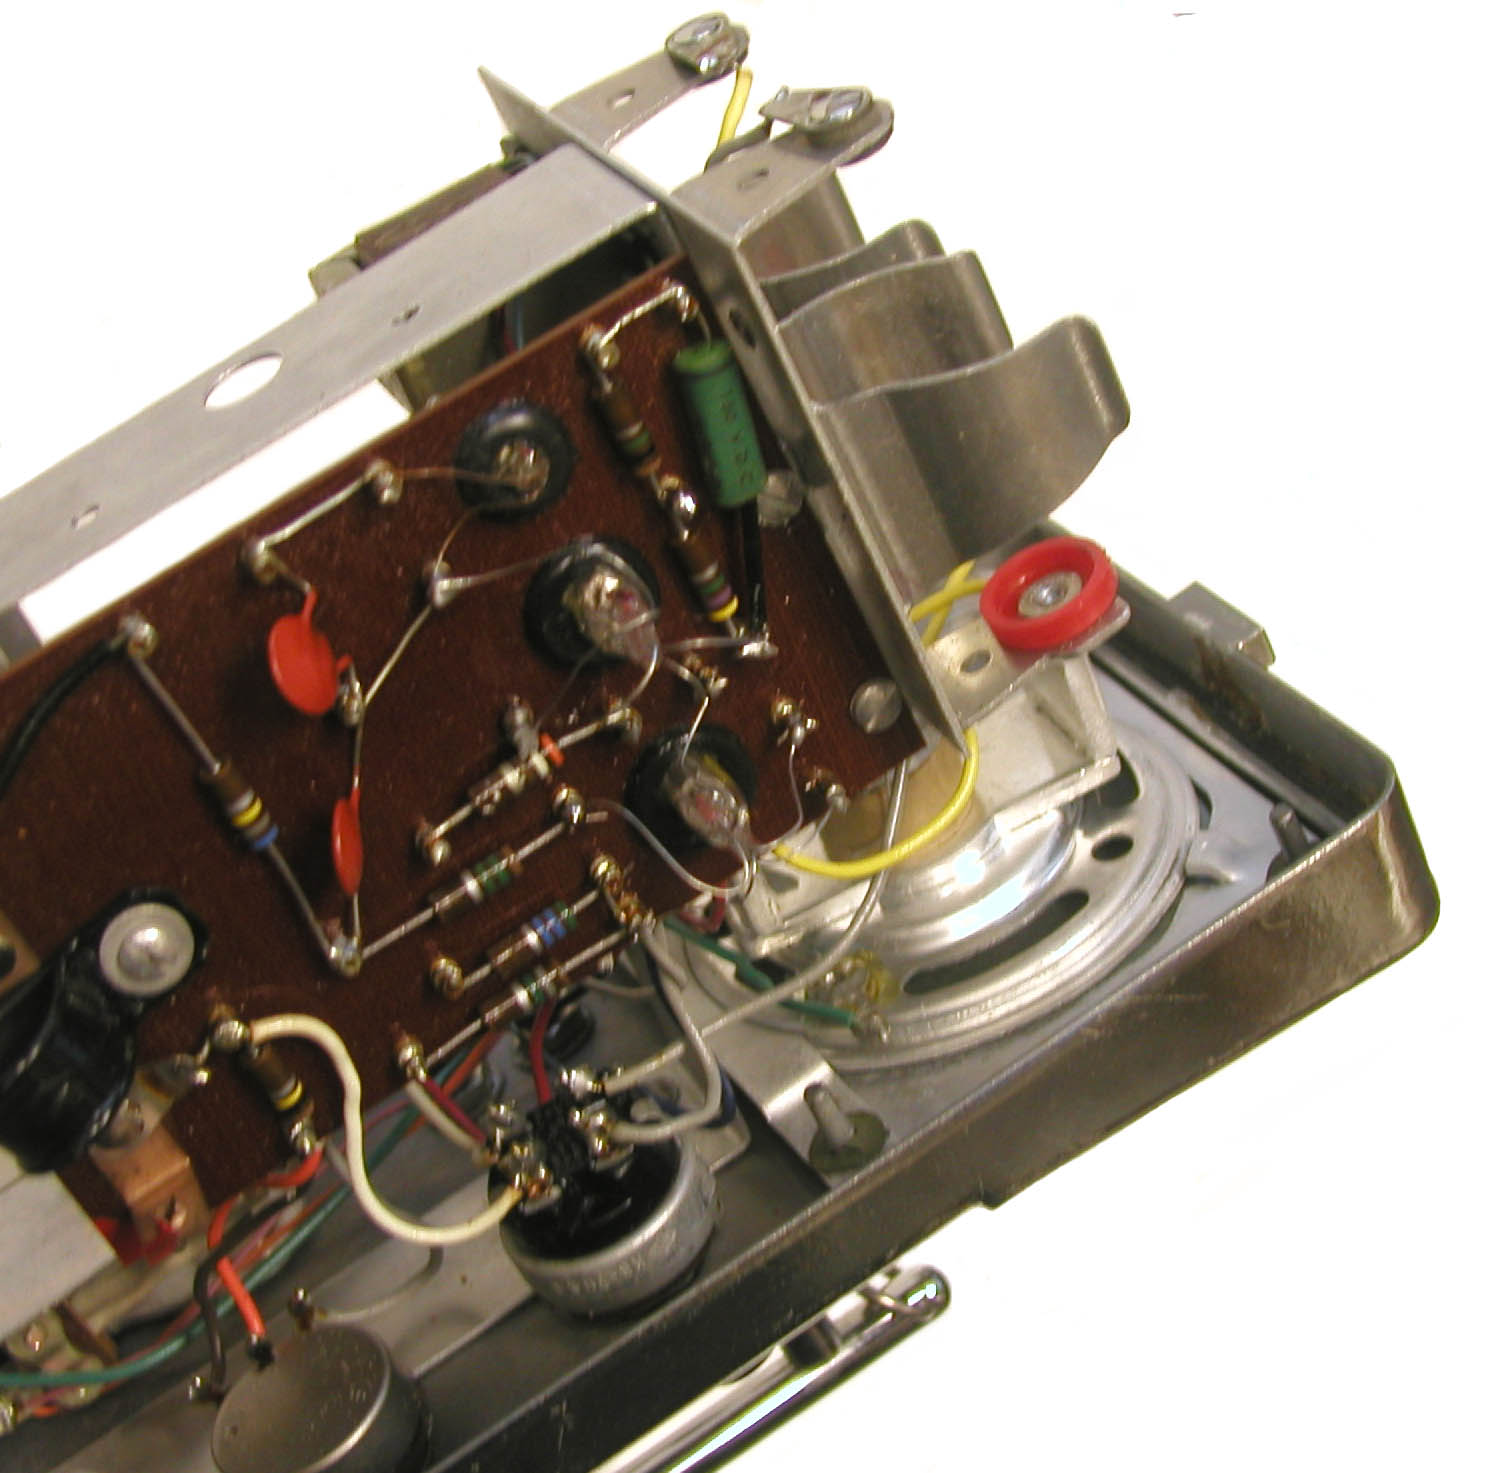 Precision Radiation Instruments Model 123 "Squealer" (ca. mid 1950s)